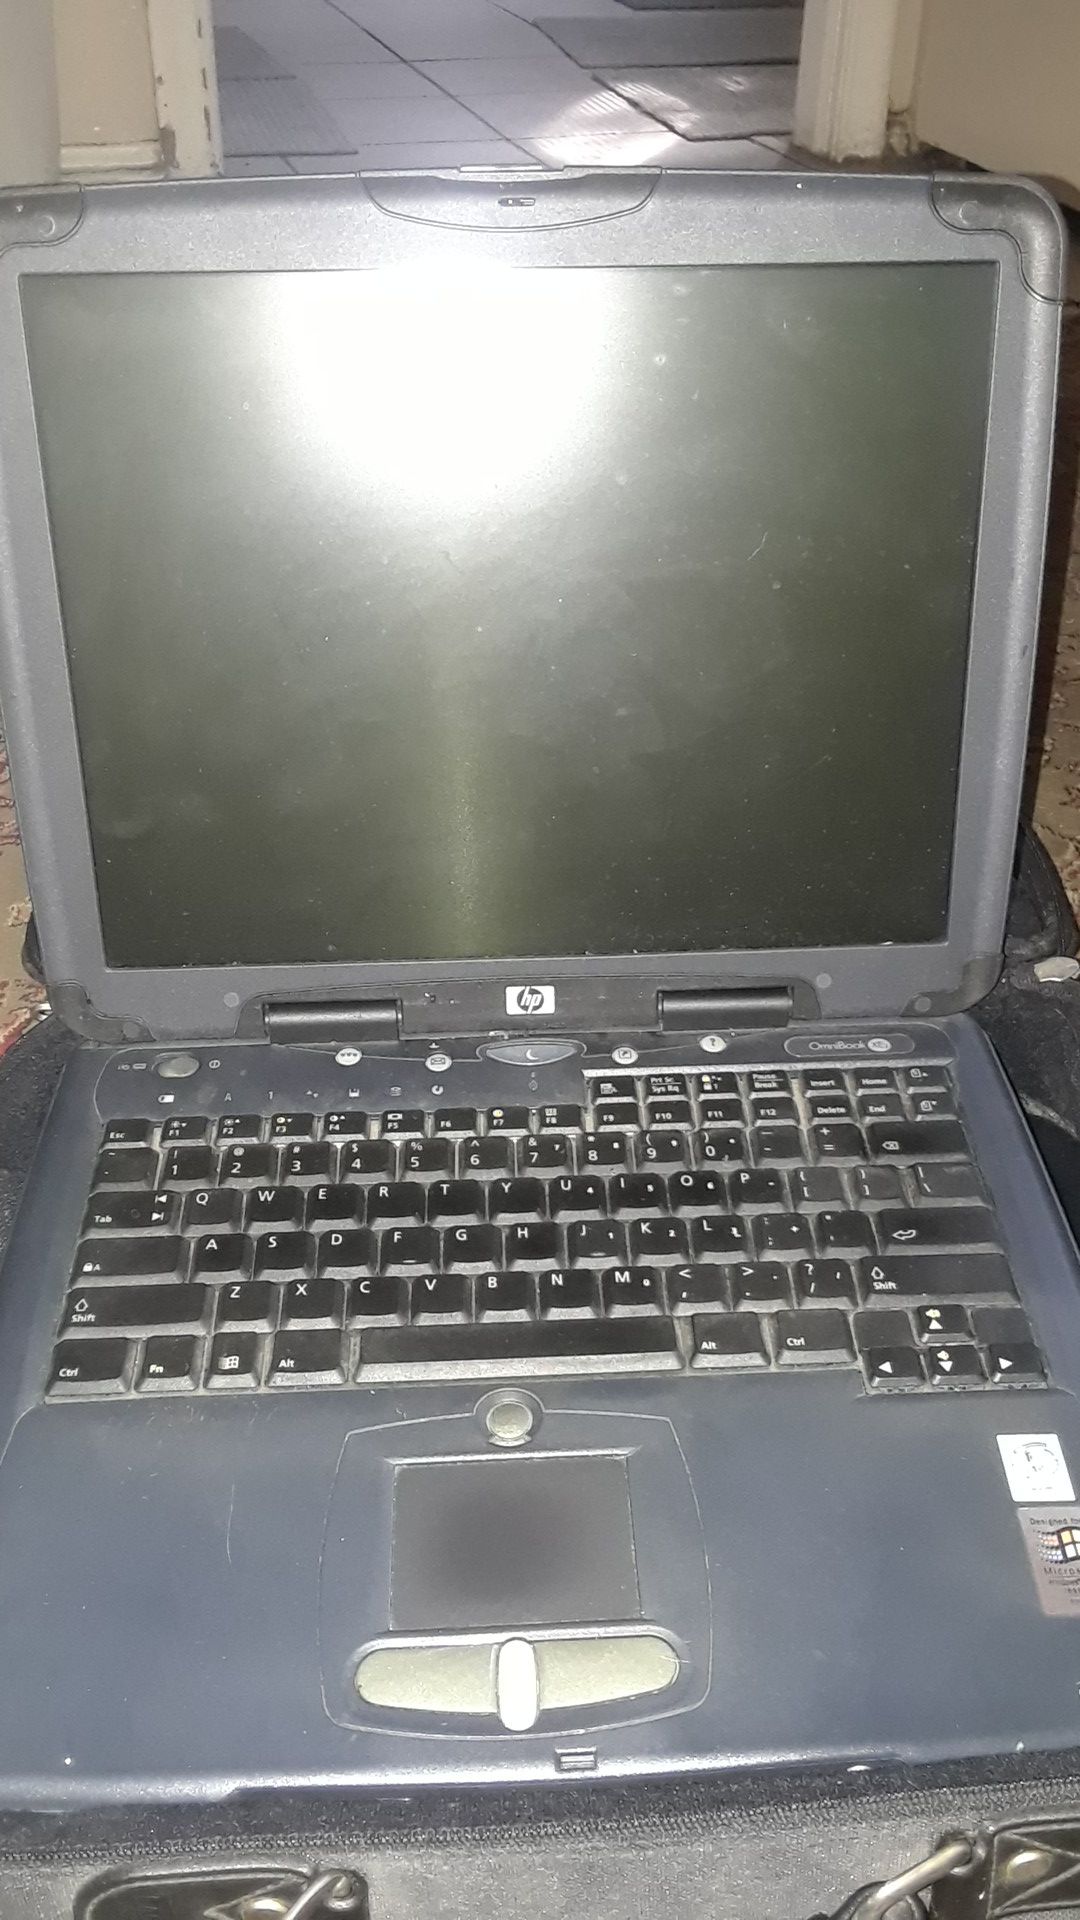 Older hp laptop still works great